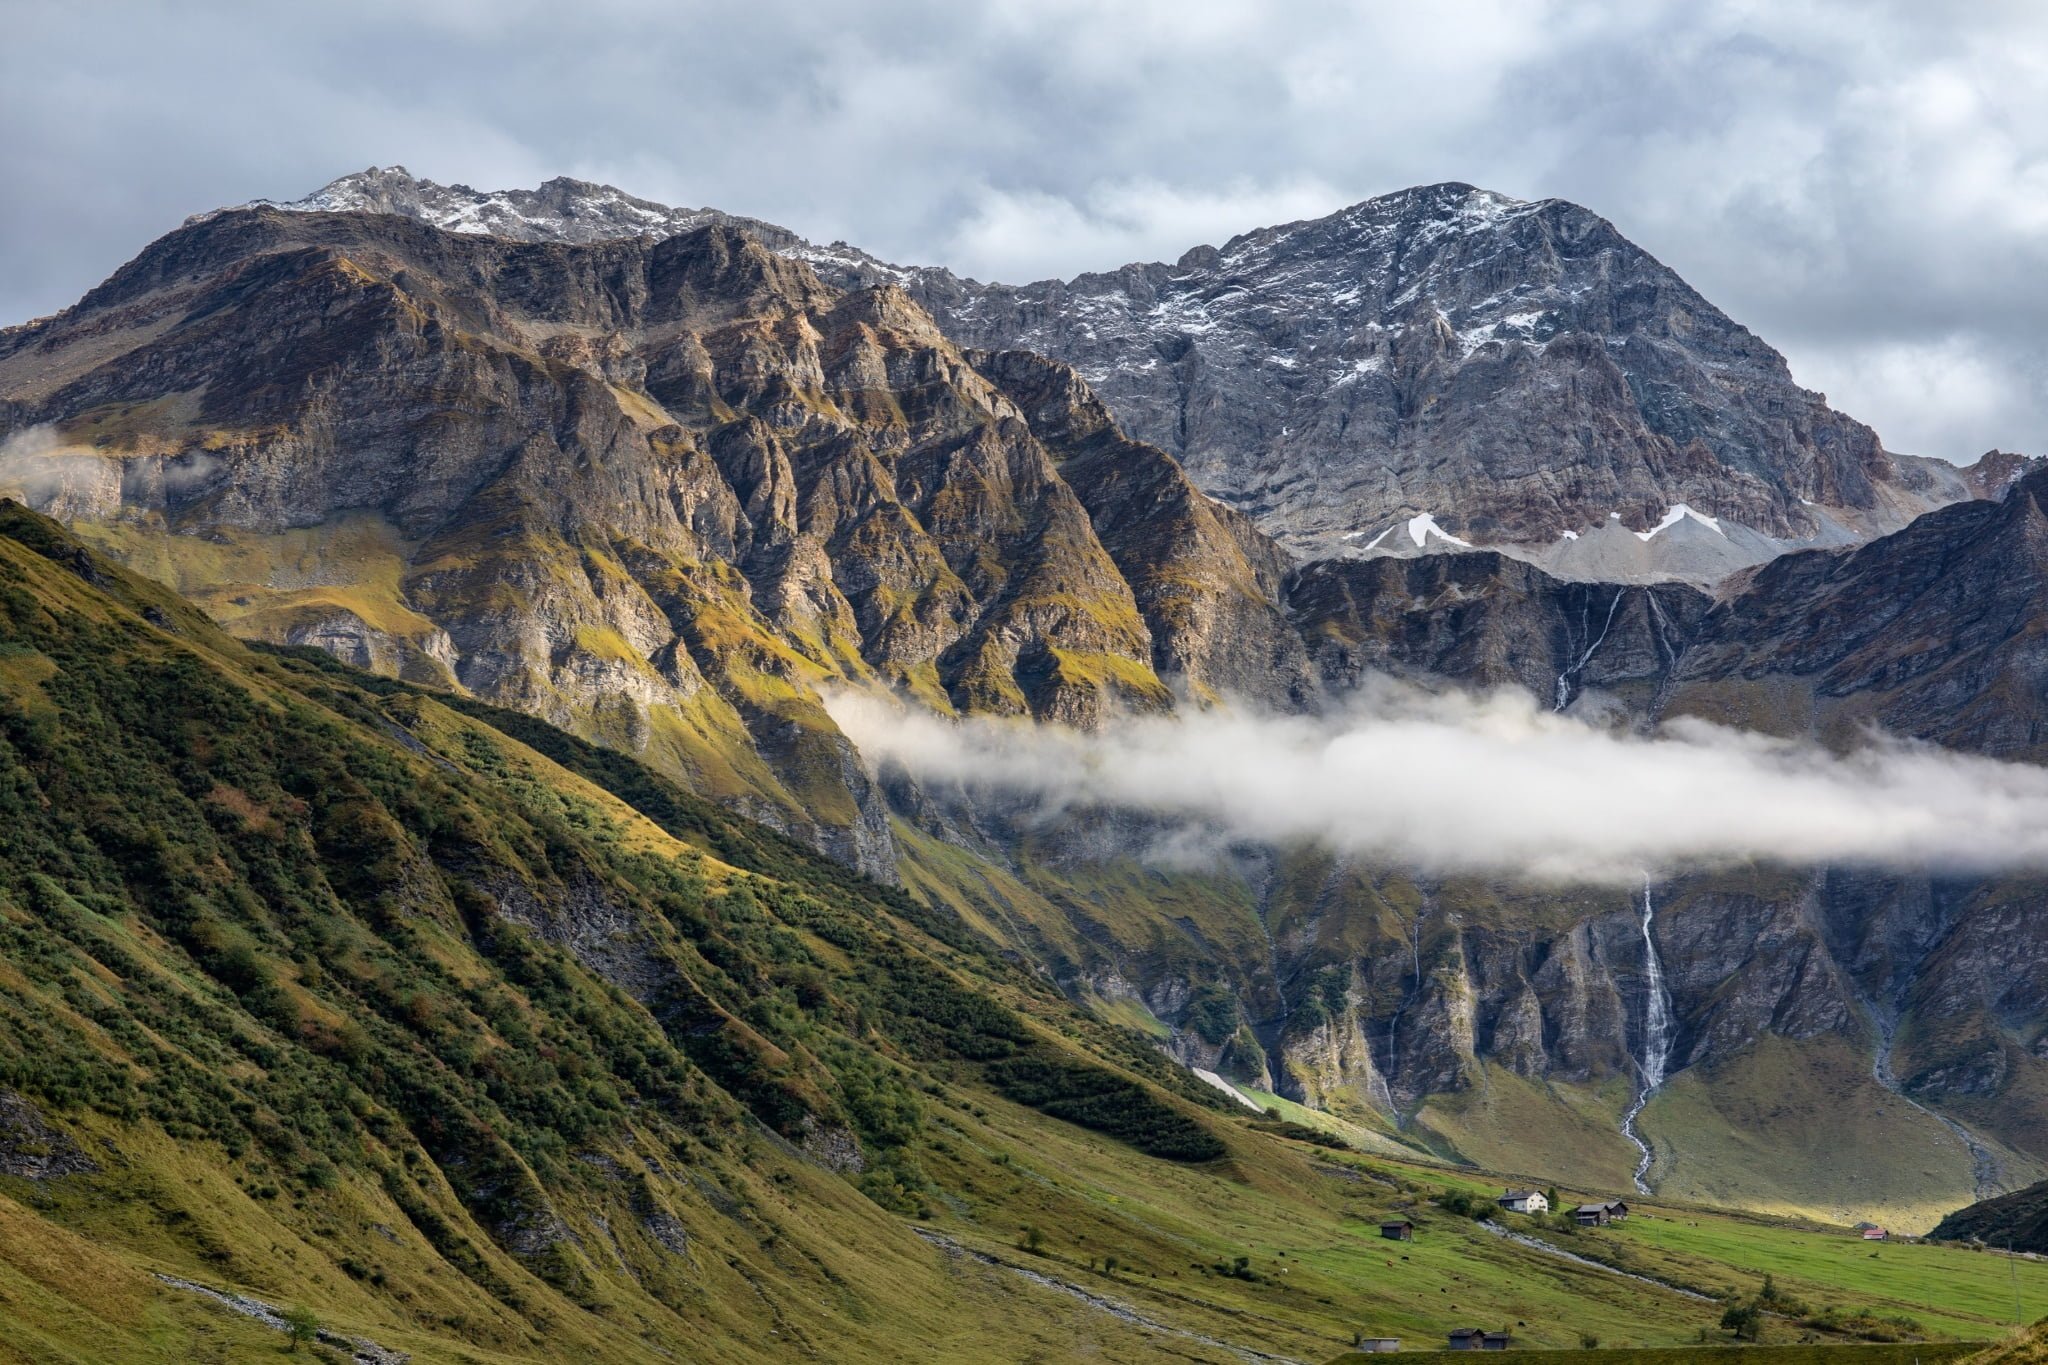 Descubre la belleza natural de Adelboden: guía turística y actividades espectaculares